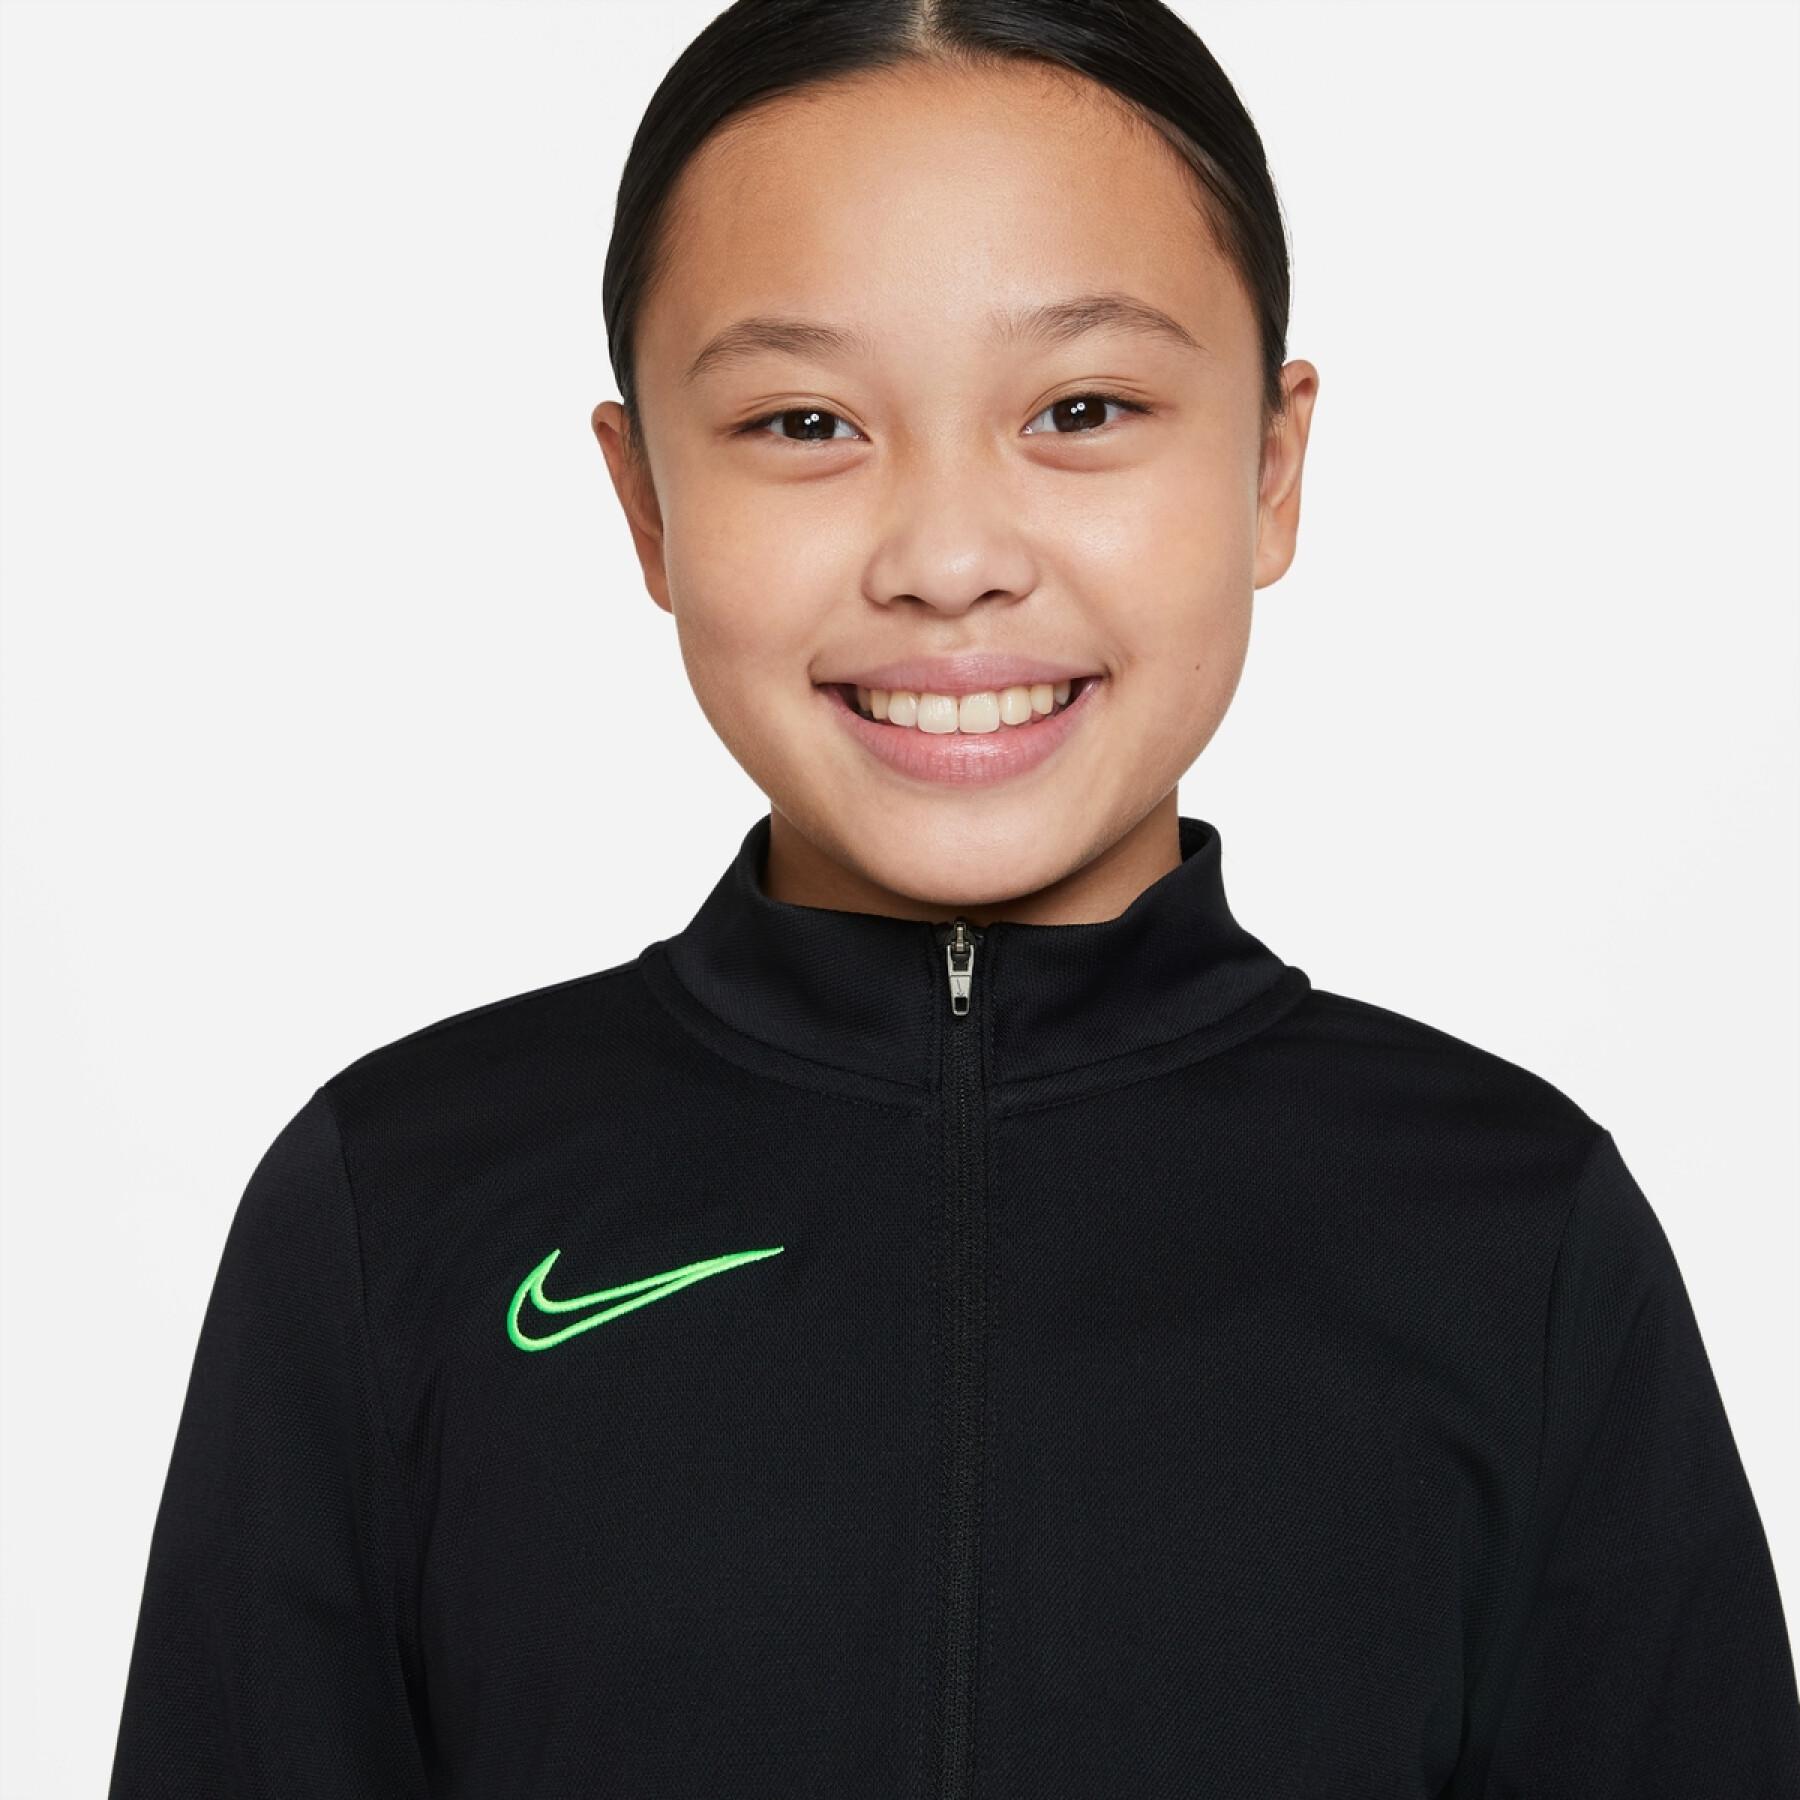 Kinder-Trainingsanzug Nike Dynamic Fit